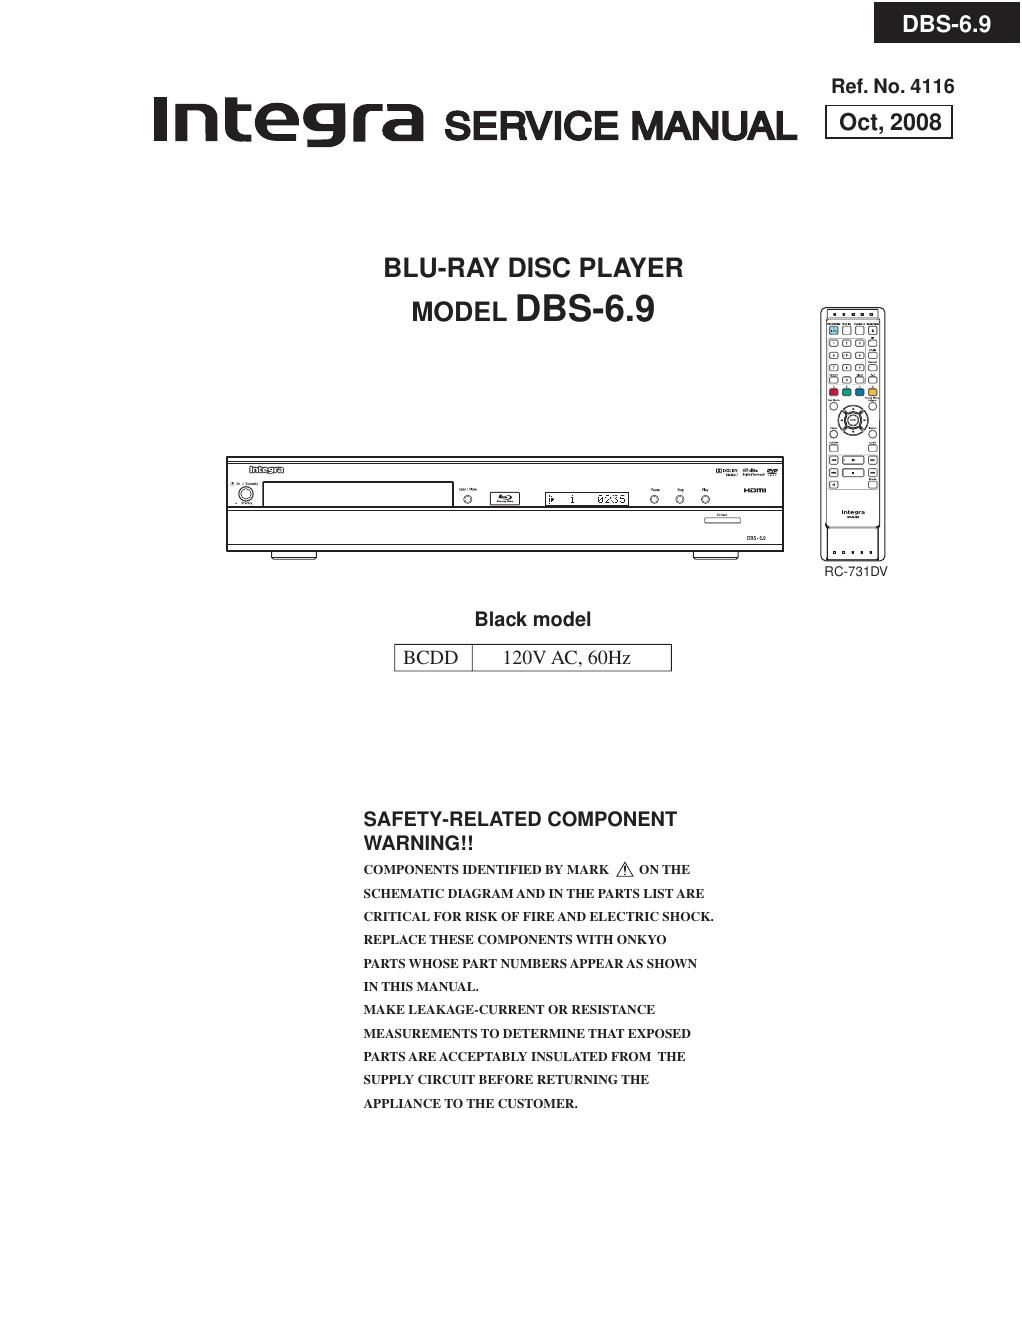 integra dbs 6 9 service manual